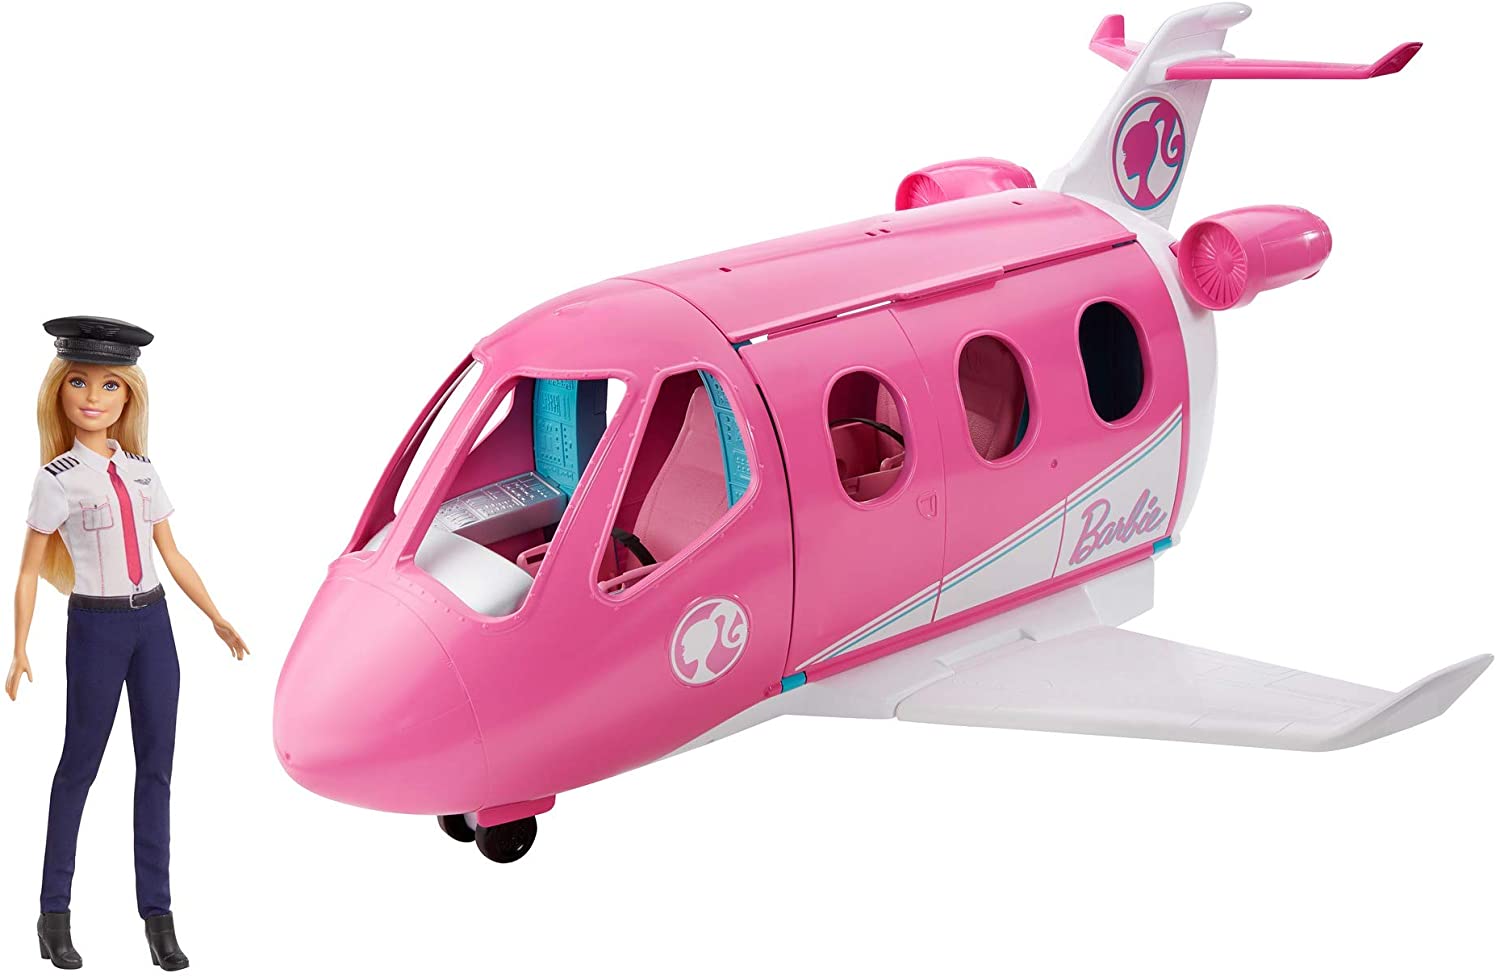 Barbie - Dream Plane with Pilot Doll (GJB33) - Leker